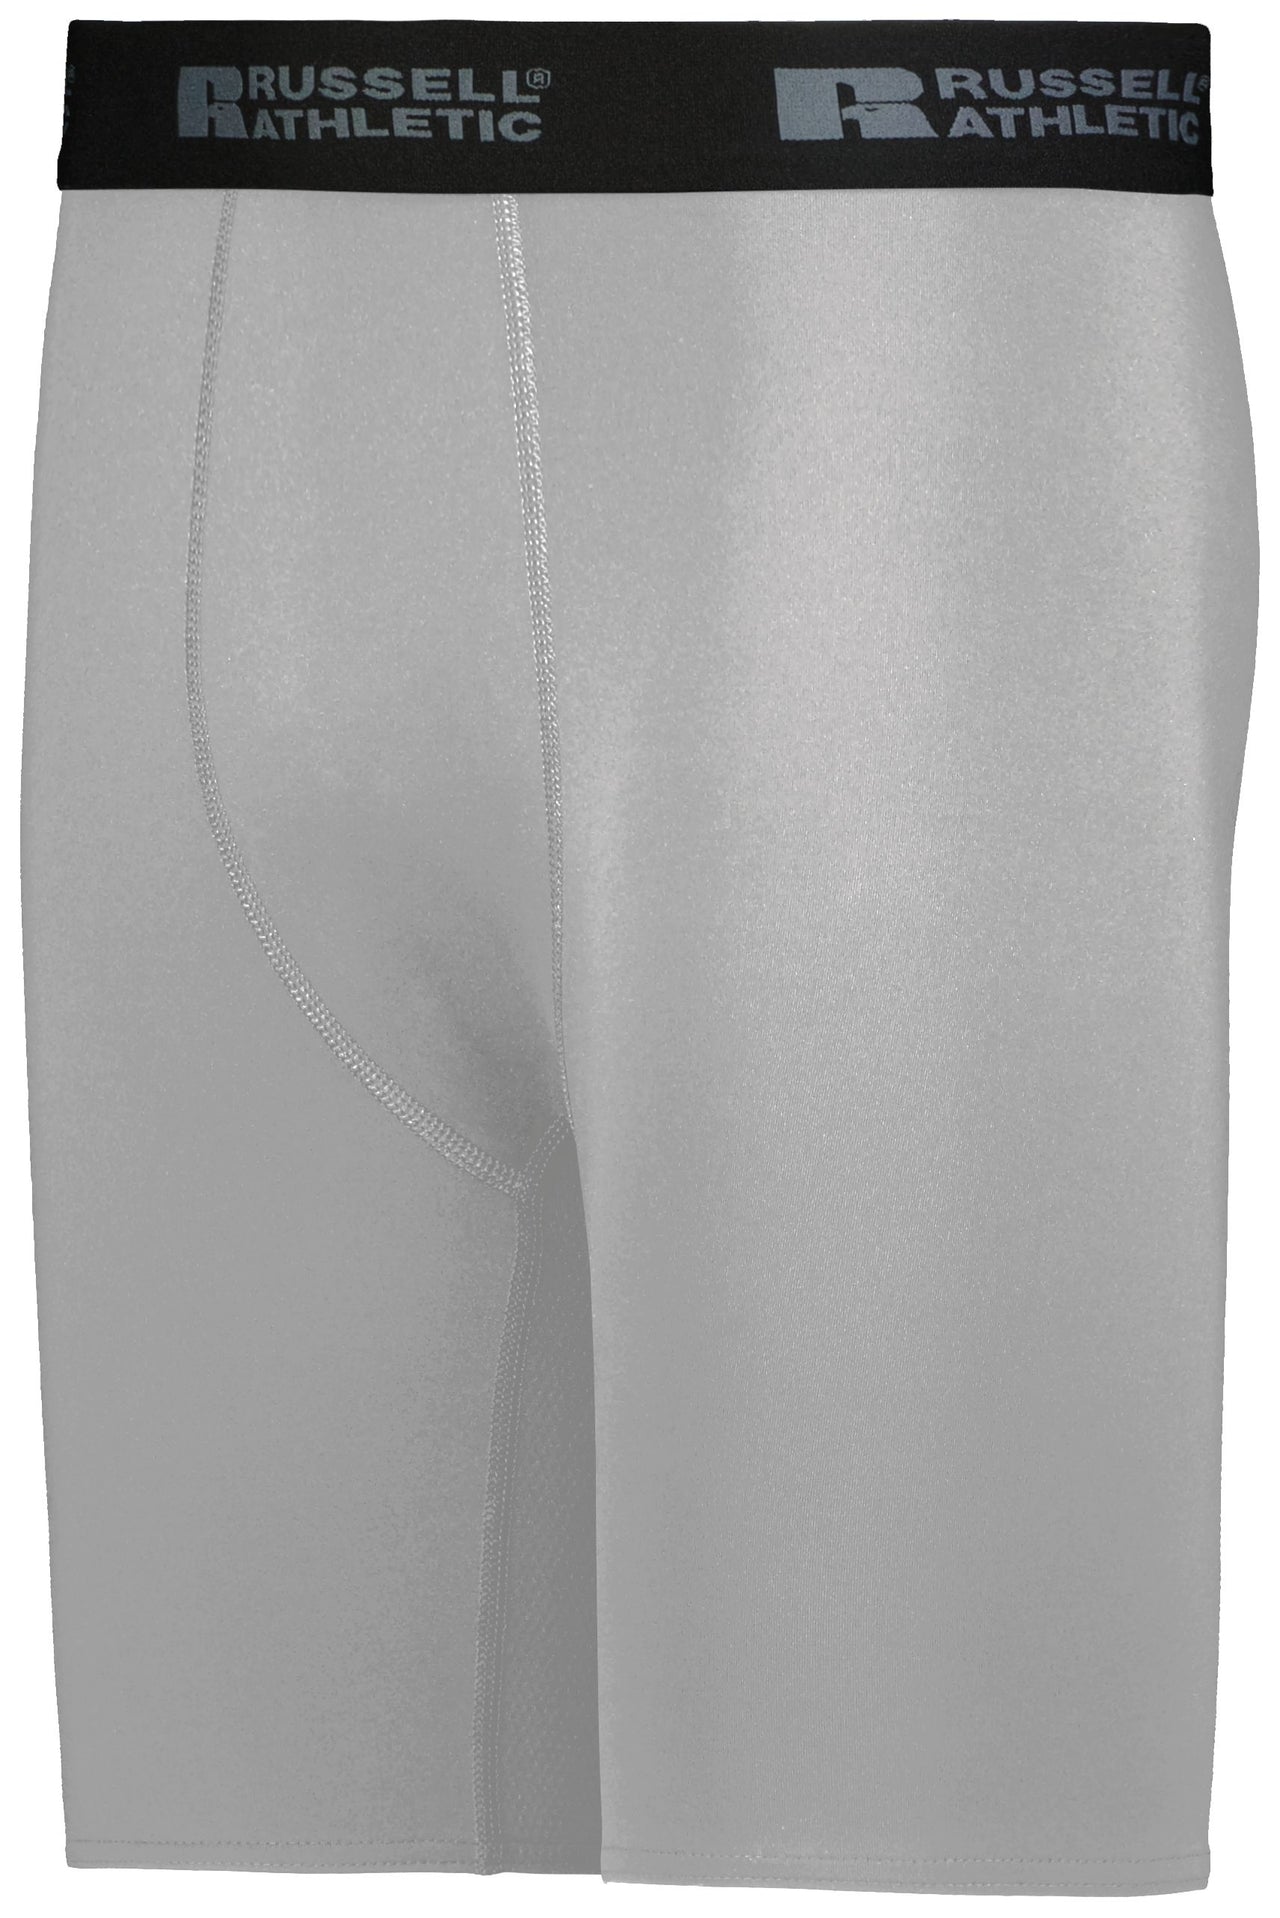 Coolcore® Compression Shorts - R24CPM